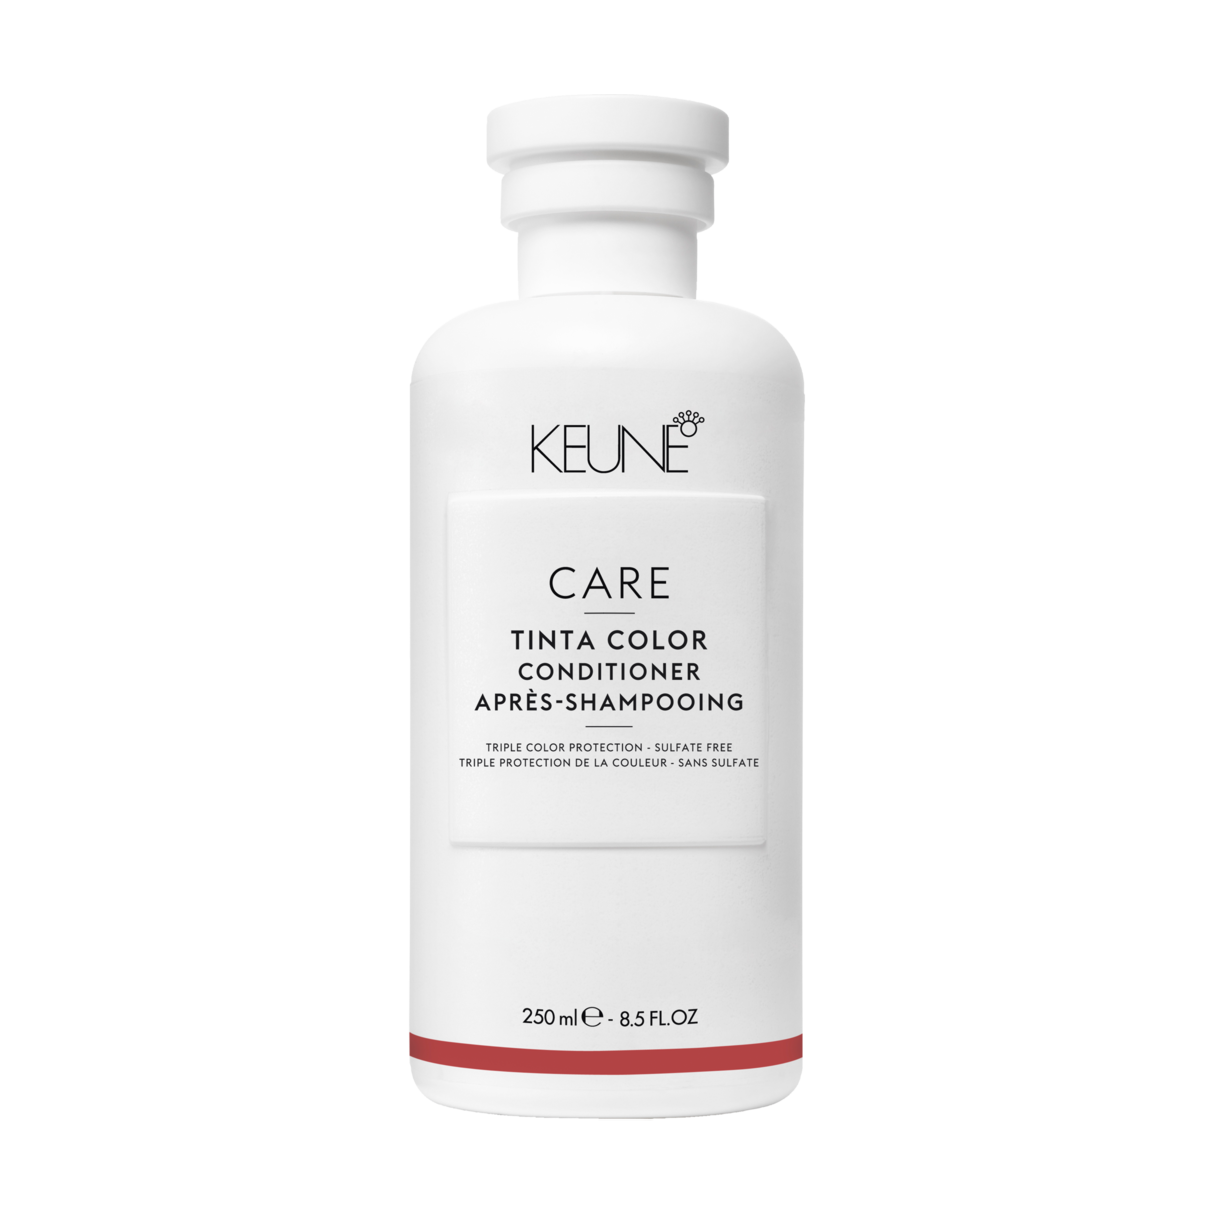 Keune Care Tinta Color Conditioner CFH Care For Hair #250ml